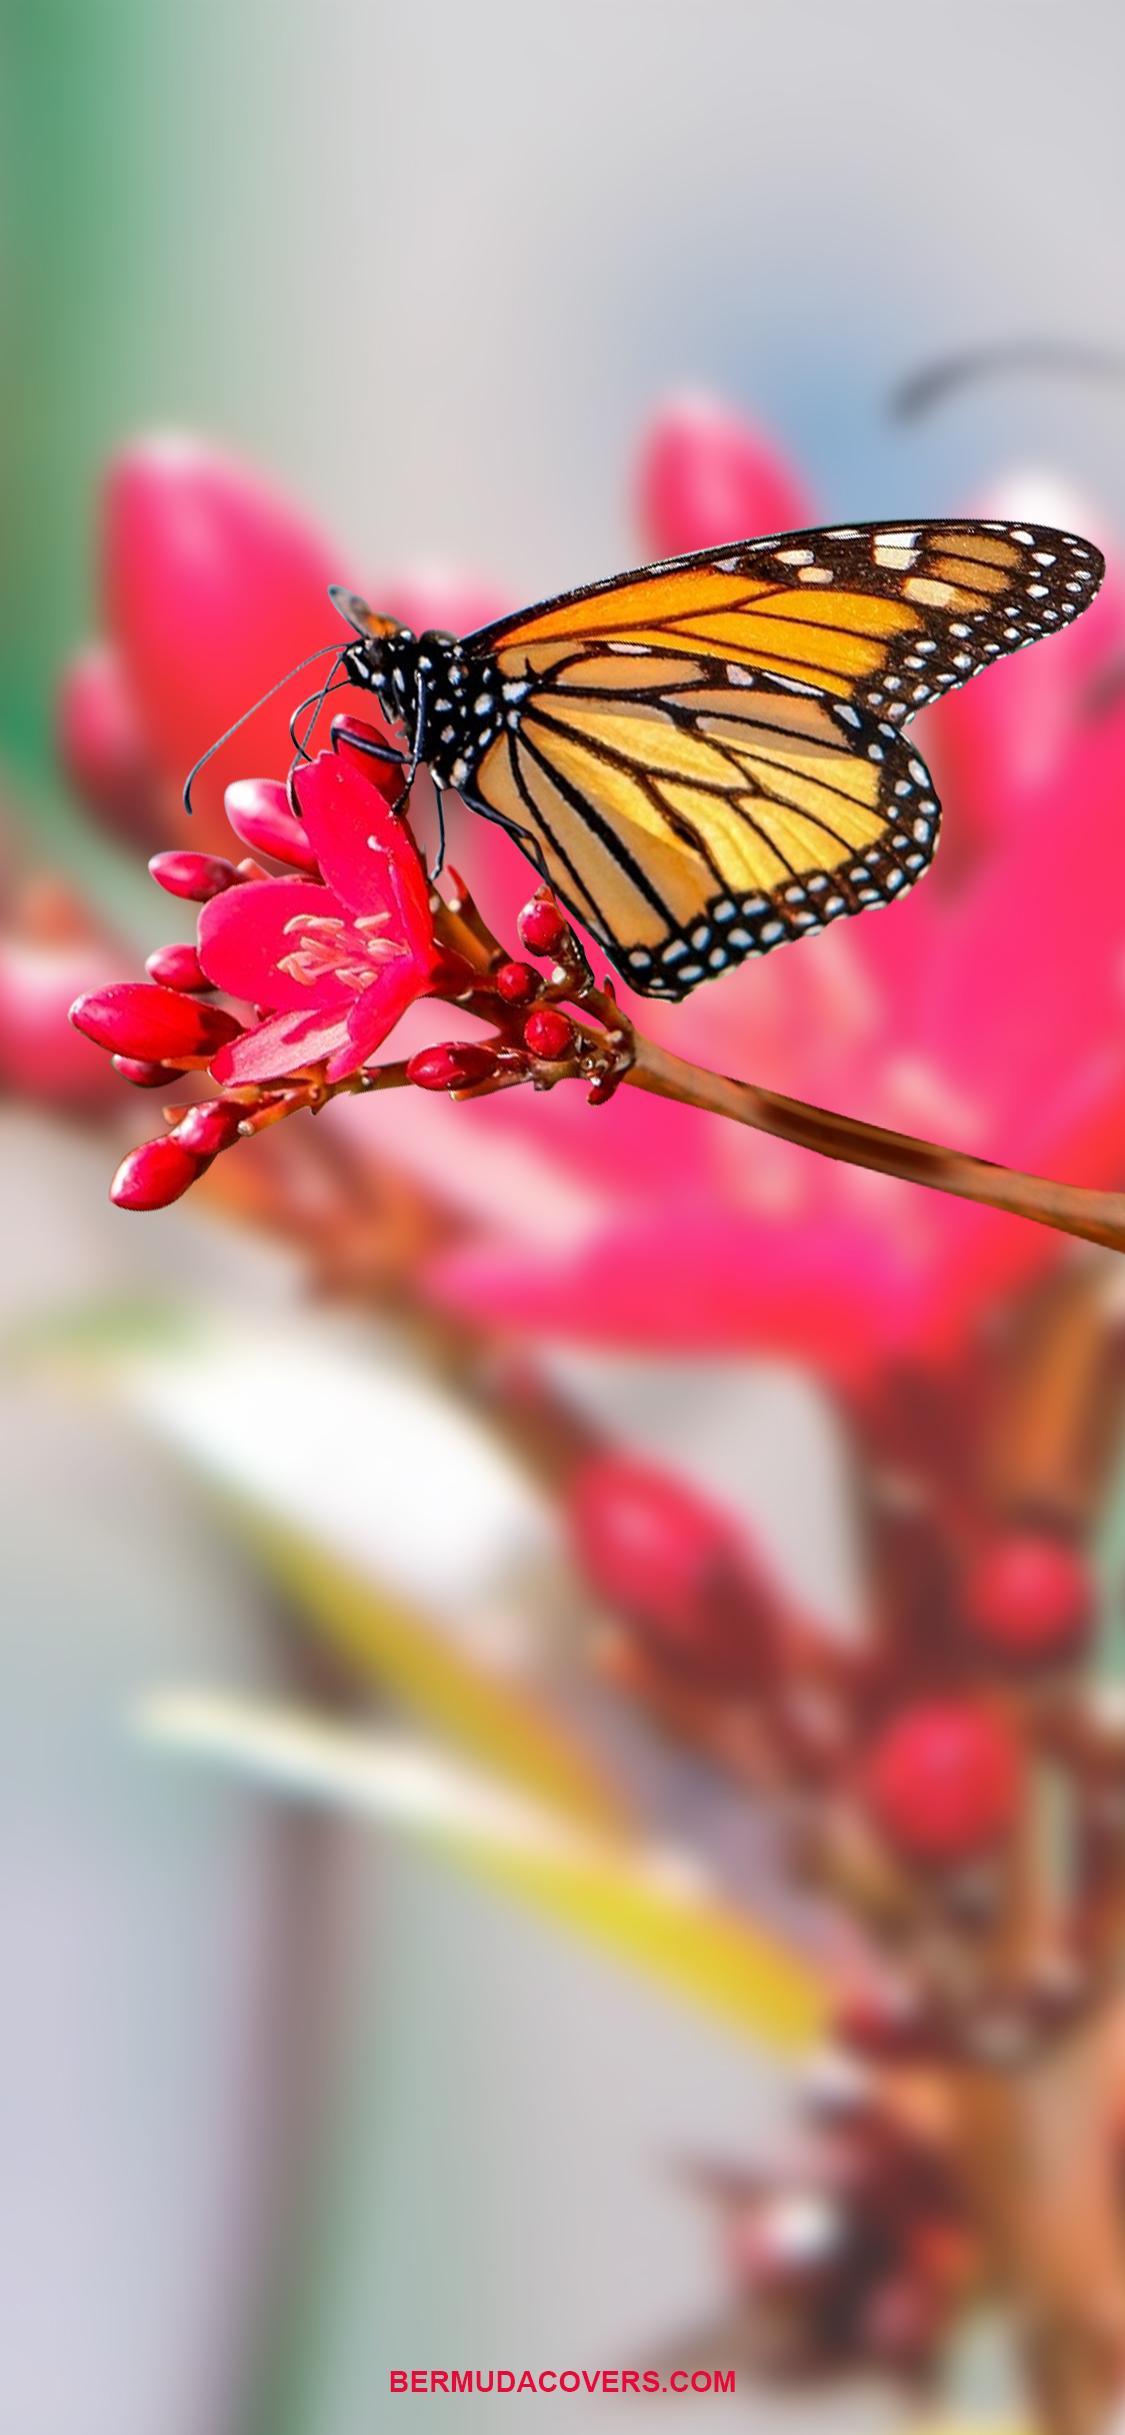 Bermuda Butterfly On Flower Cover Phone Wallpaper